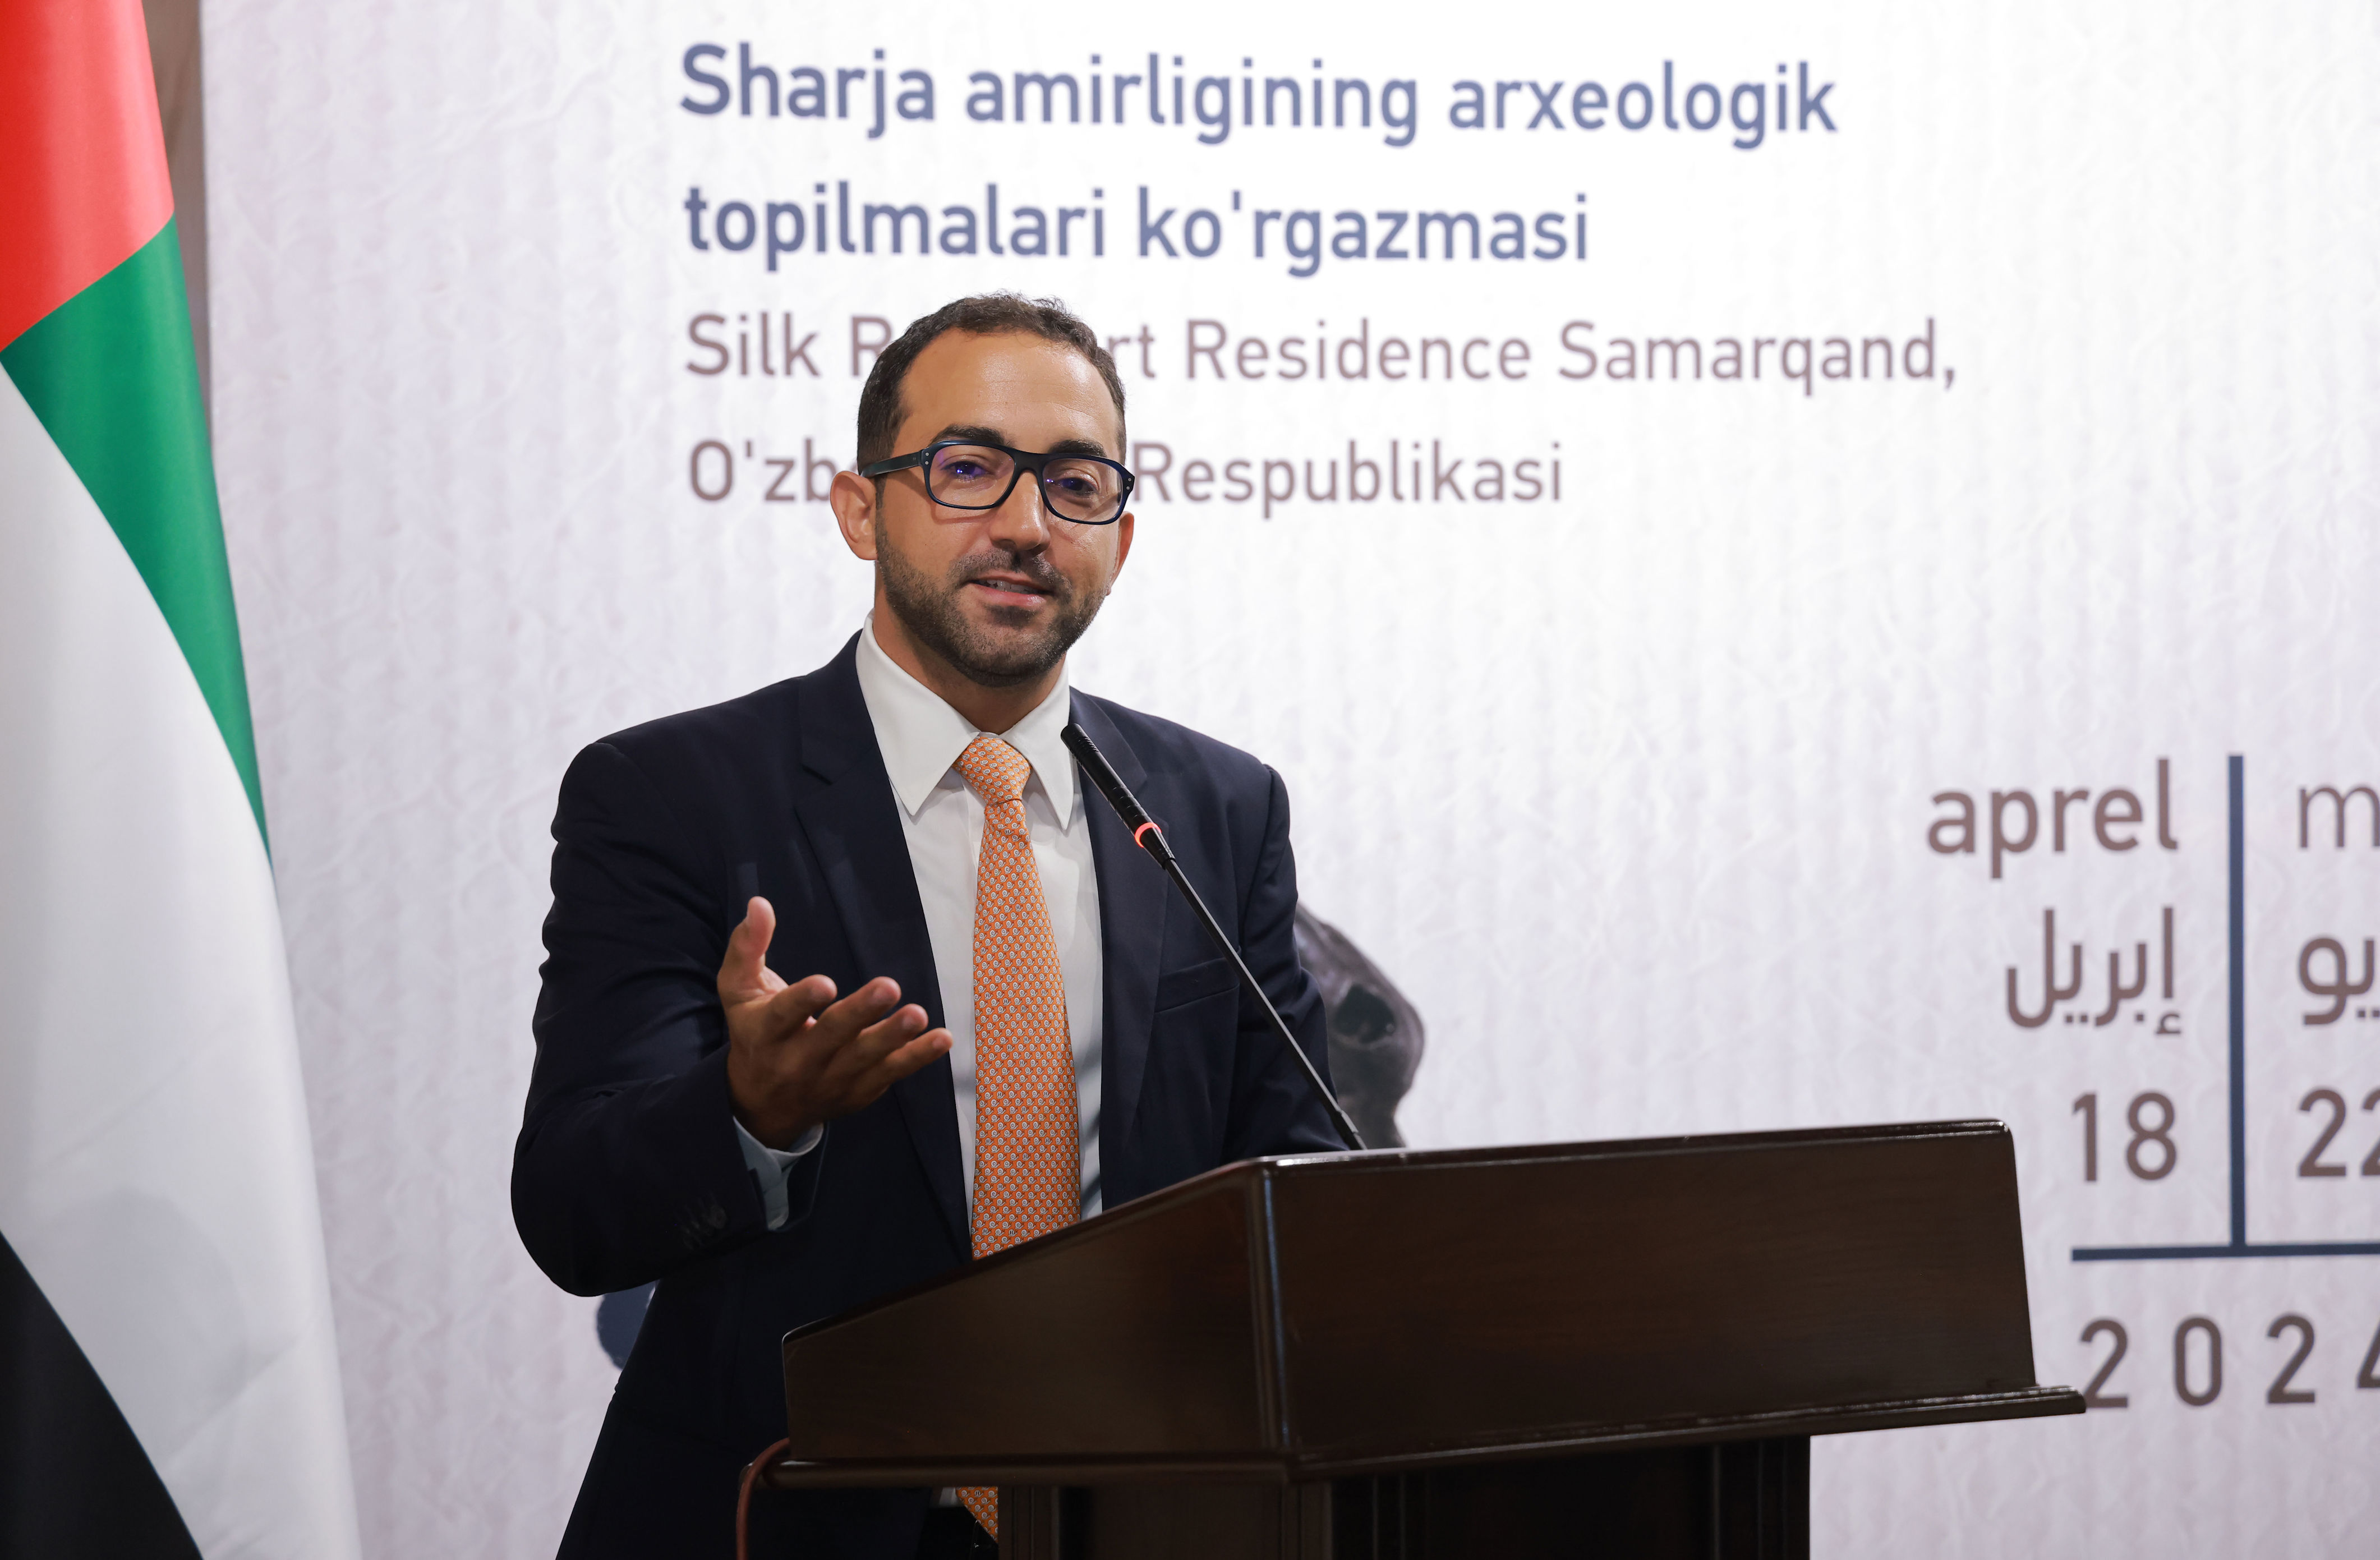 sharjah archaeology authority opens exhibition in uzbekistan